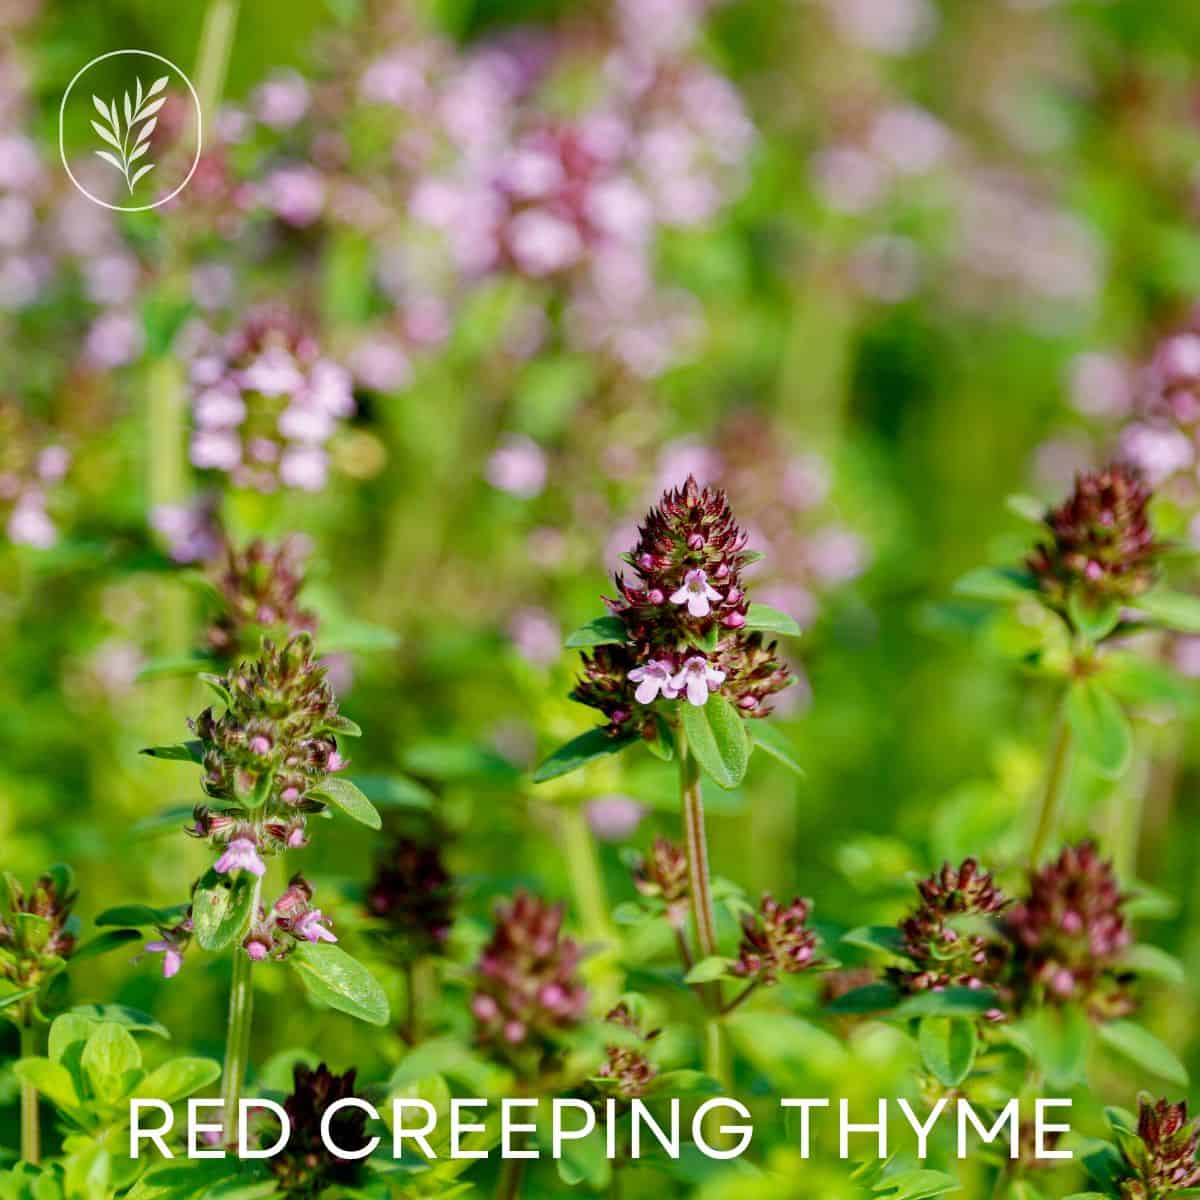 Red creeping thyme via @home4theharvest